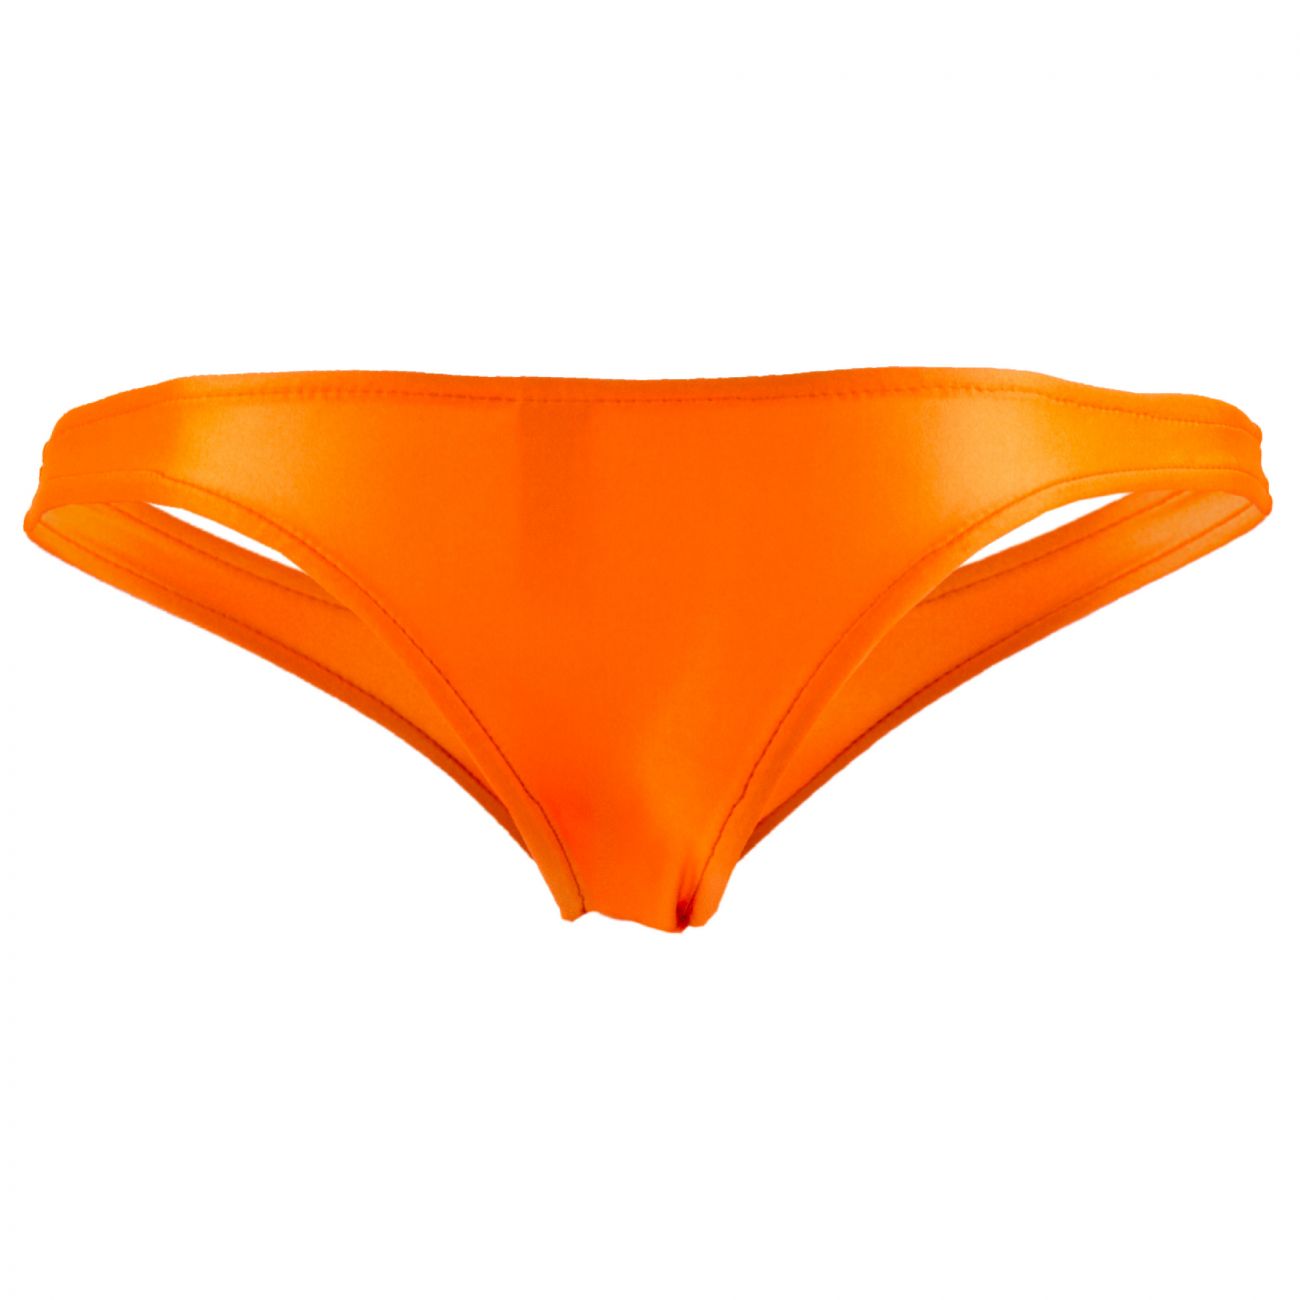 Mens Underwear: Male Power PAK874 Euro Male Spandex Full Cut Thong | eBay